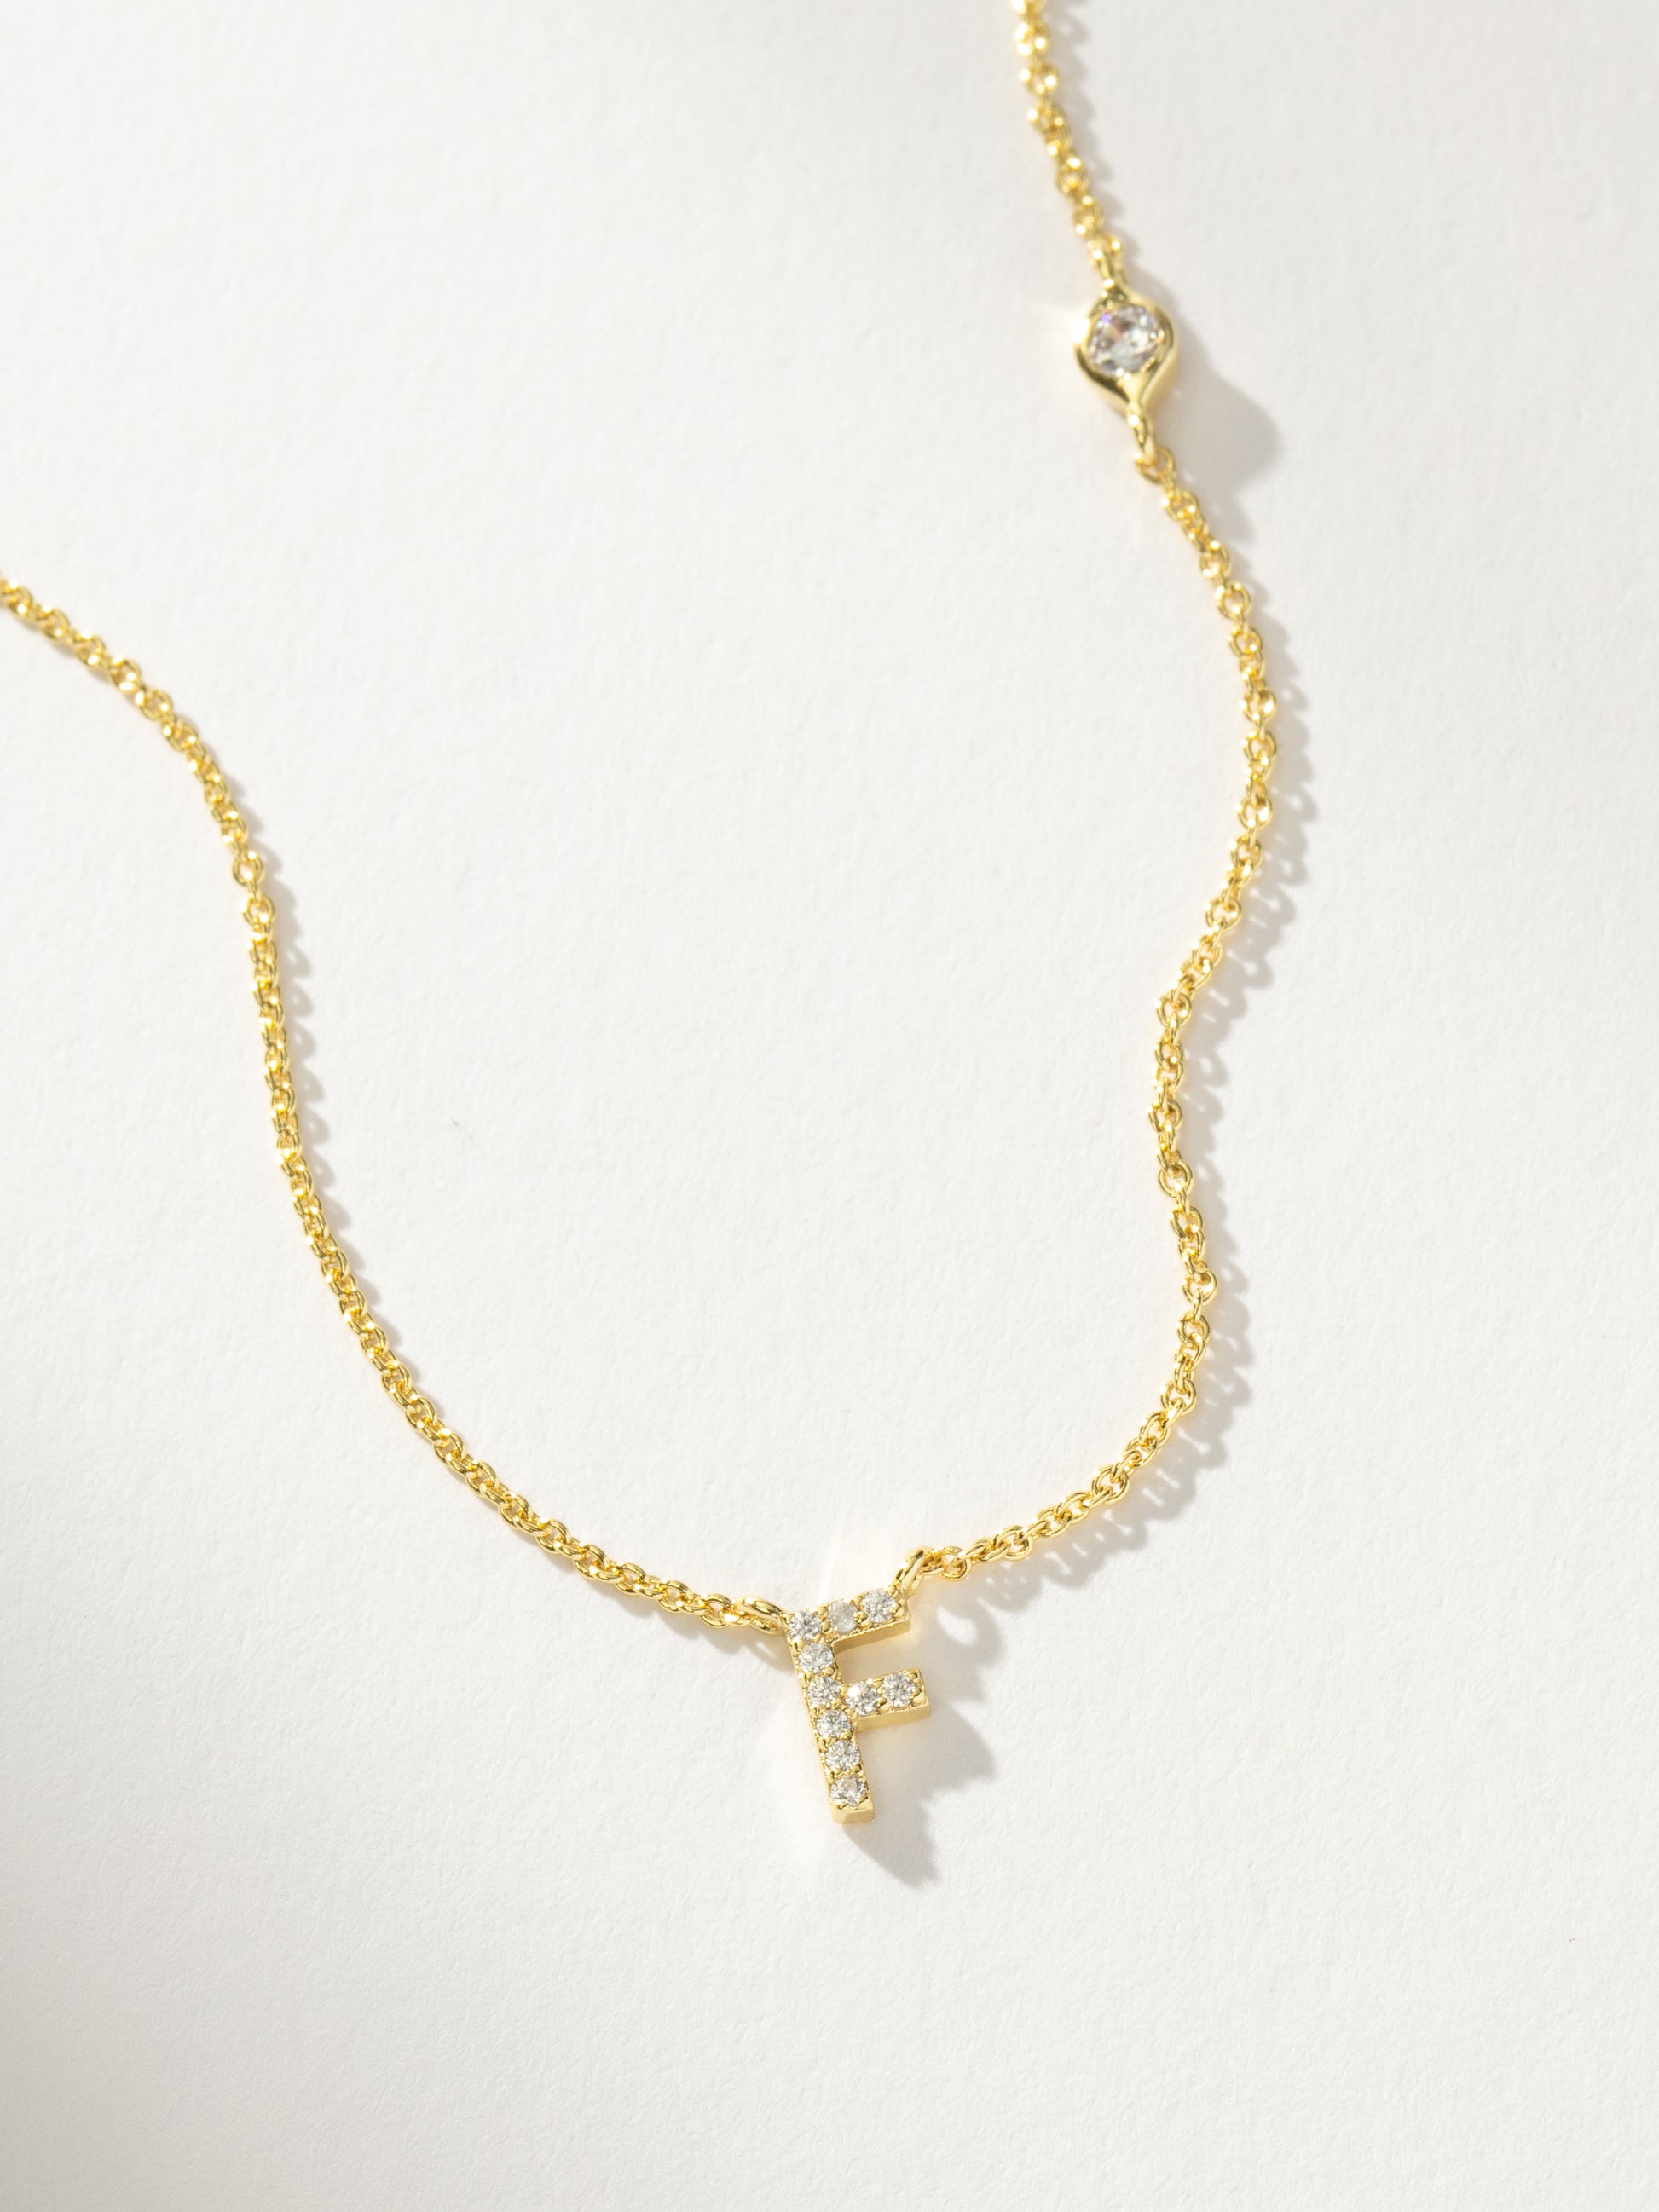 Pavé Initial Necklace | Gold F | Product Detail Image | Uncommon James